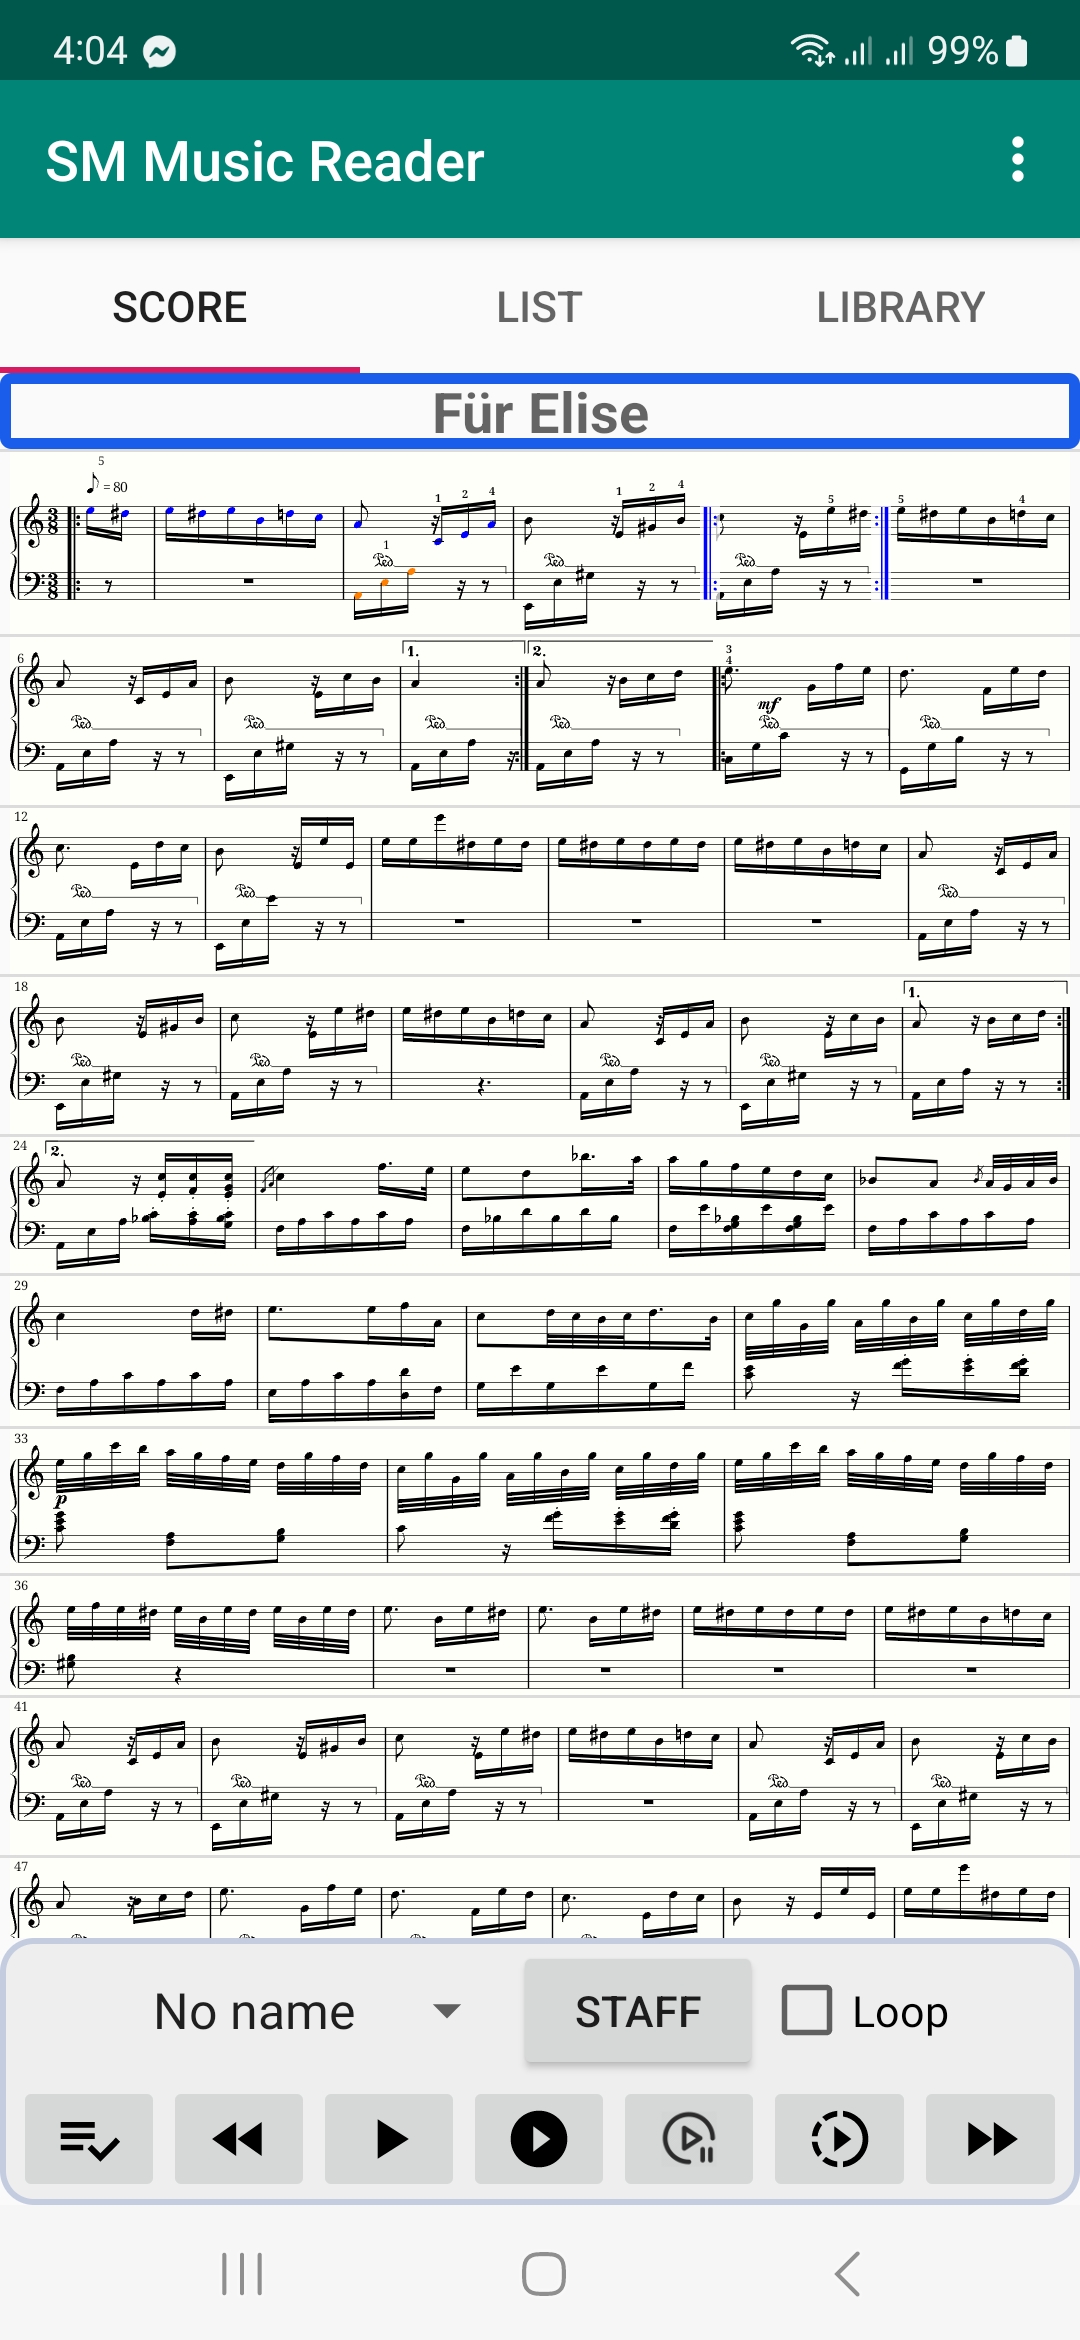 Fùr Elise by Beethoven